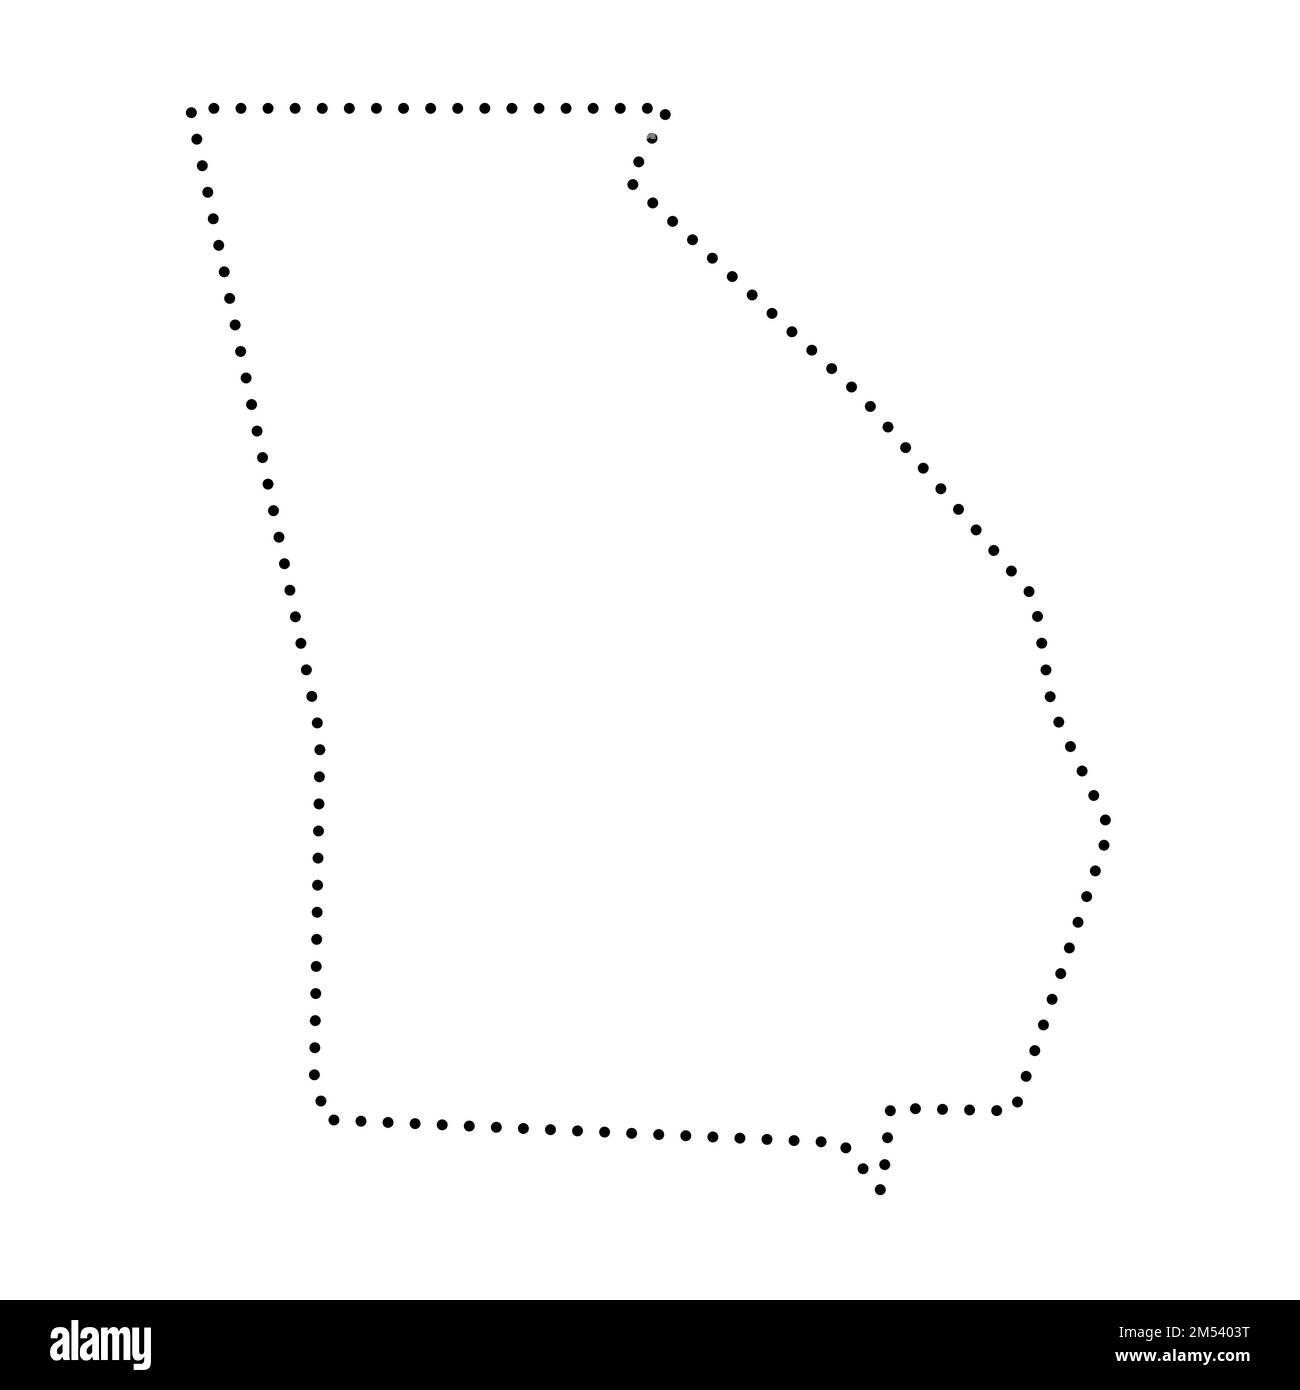 Georgia State of United States of America, USA. Vereinfachte dicke schwarze Umrisskarte. Einfache flache Vektordarstellung Stock Vektor